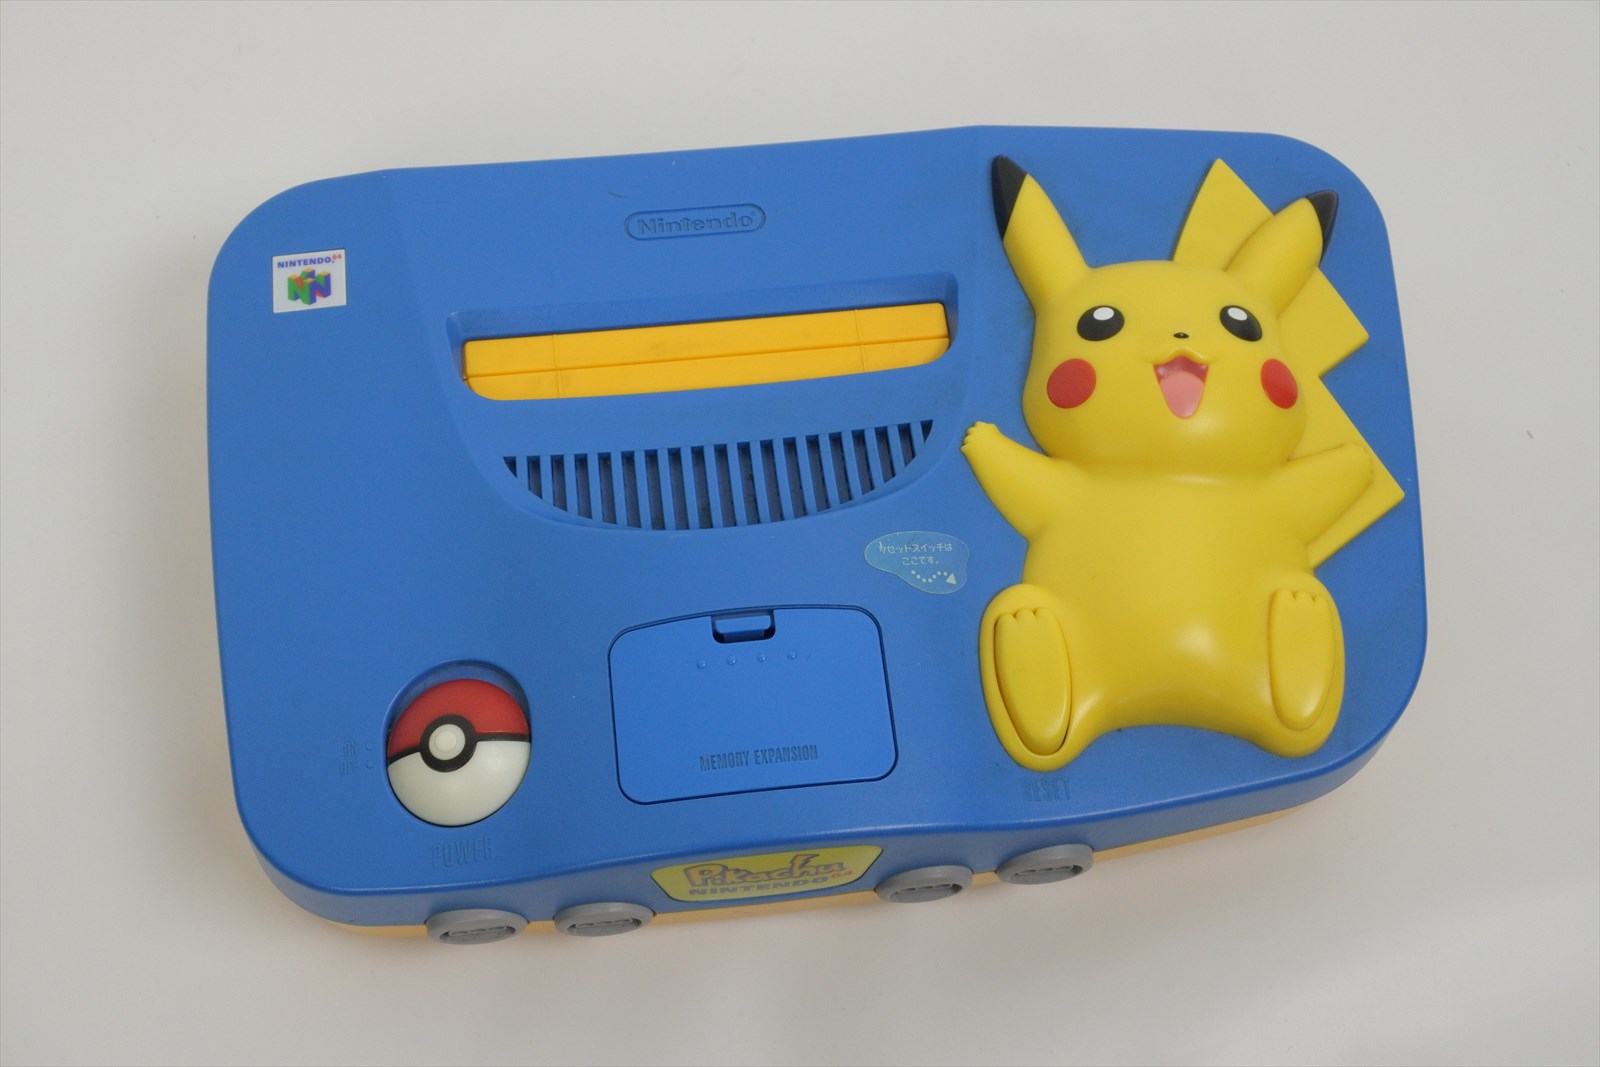 pokemon yellow pc box full